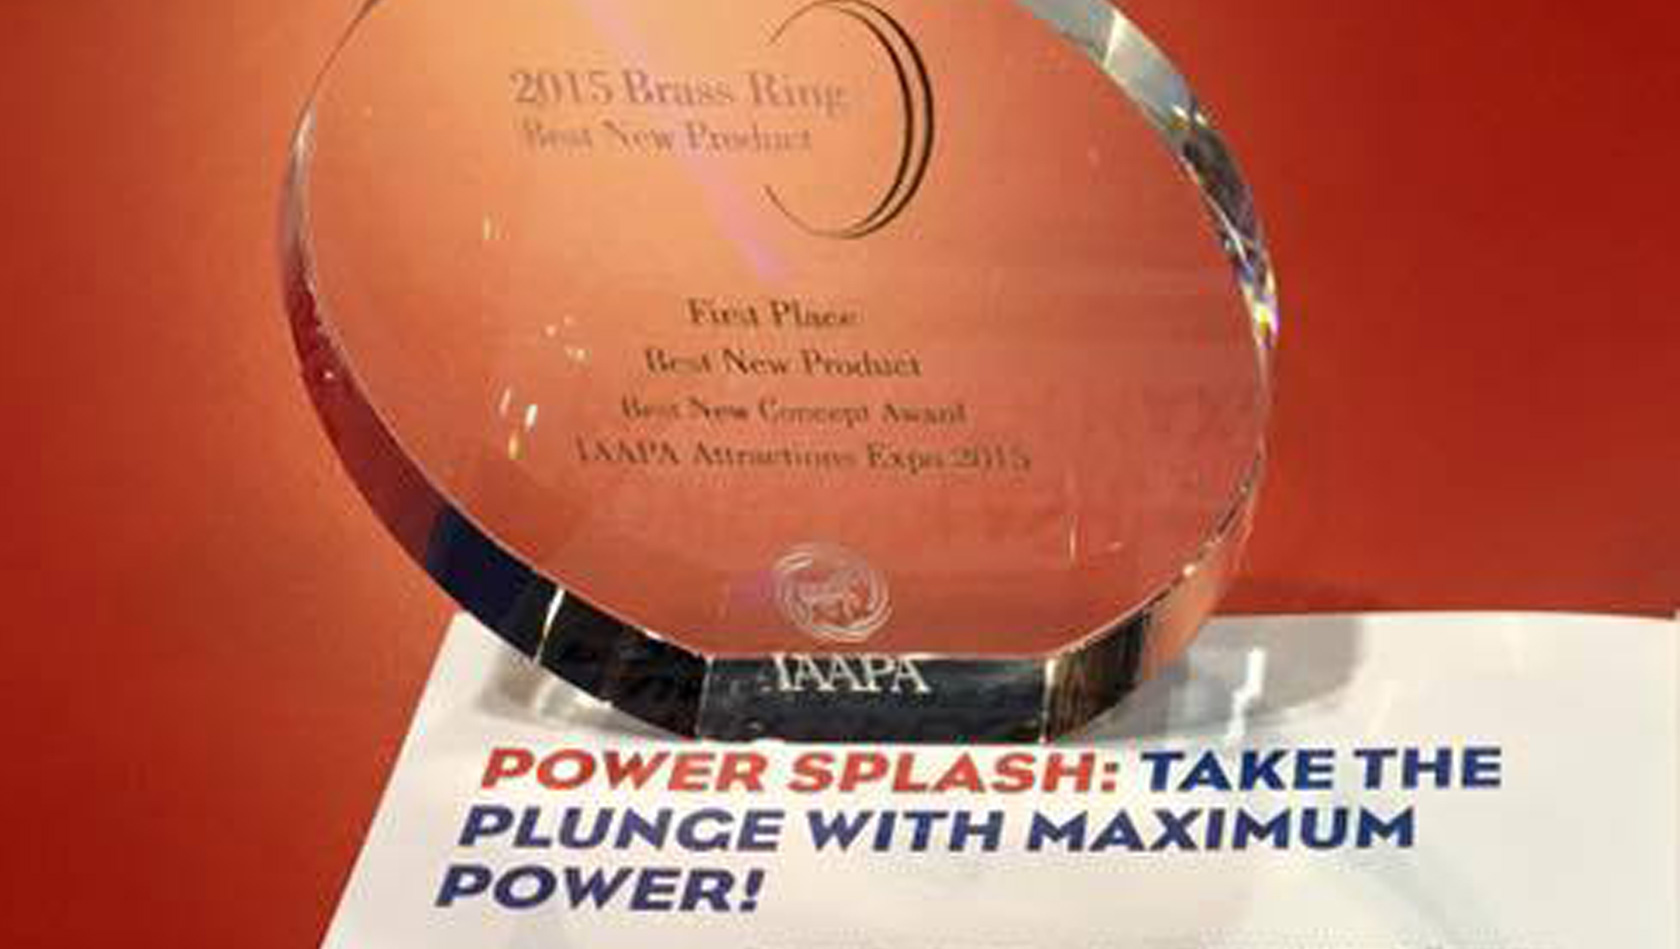 Power Splash - Mack Rides - Brass Ring Awards 2015